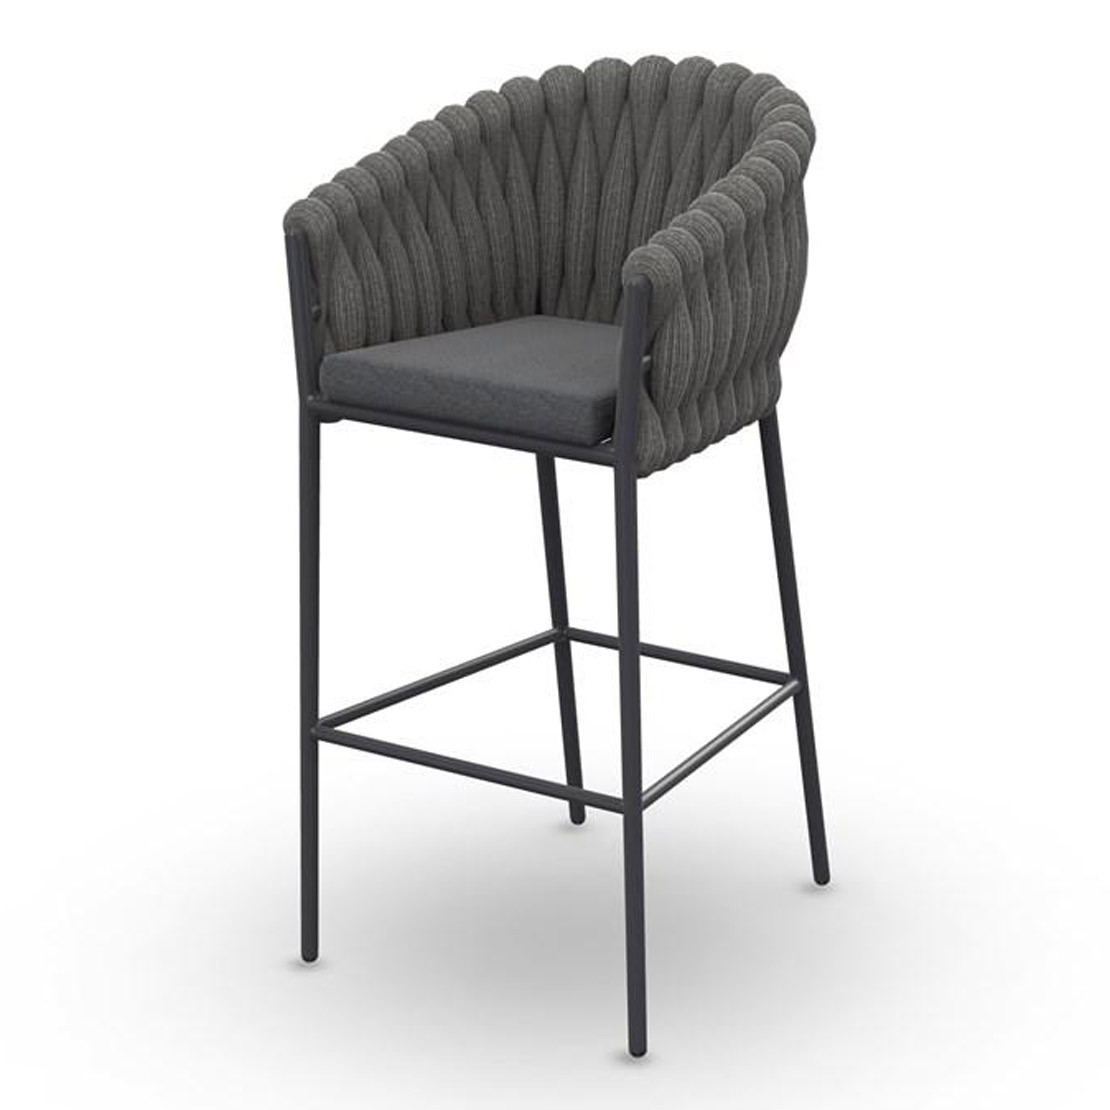 Fortuna Socks Bar Chair With Arms Alu Charcoal Mat Socks Seat Cushion Sunbrella Sooty